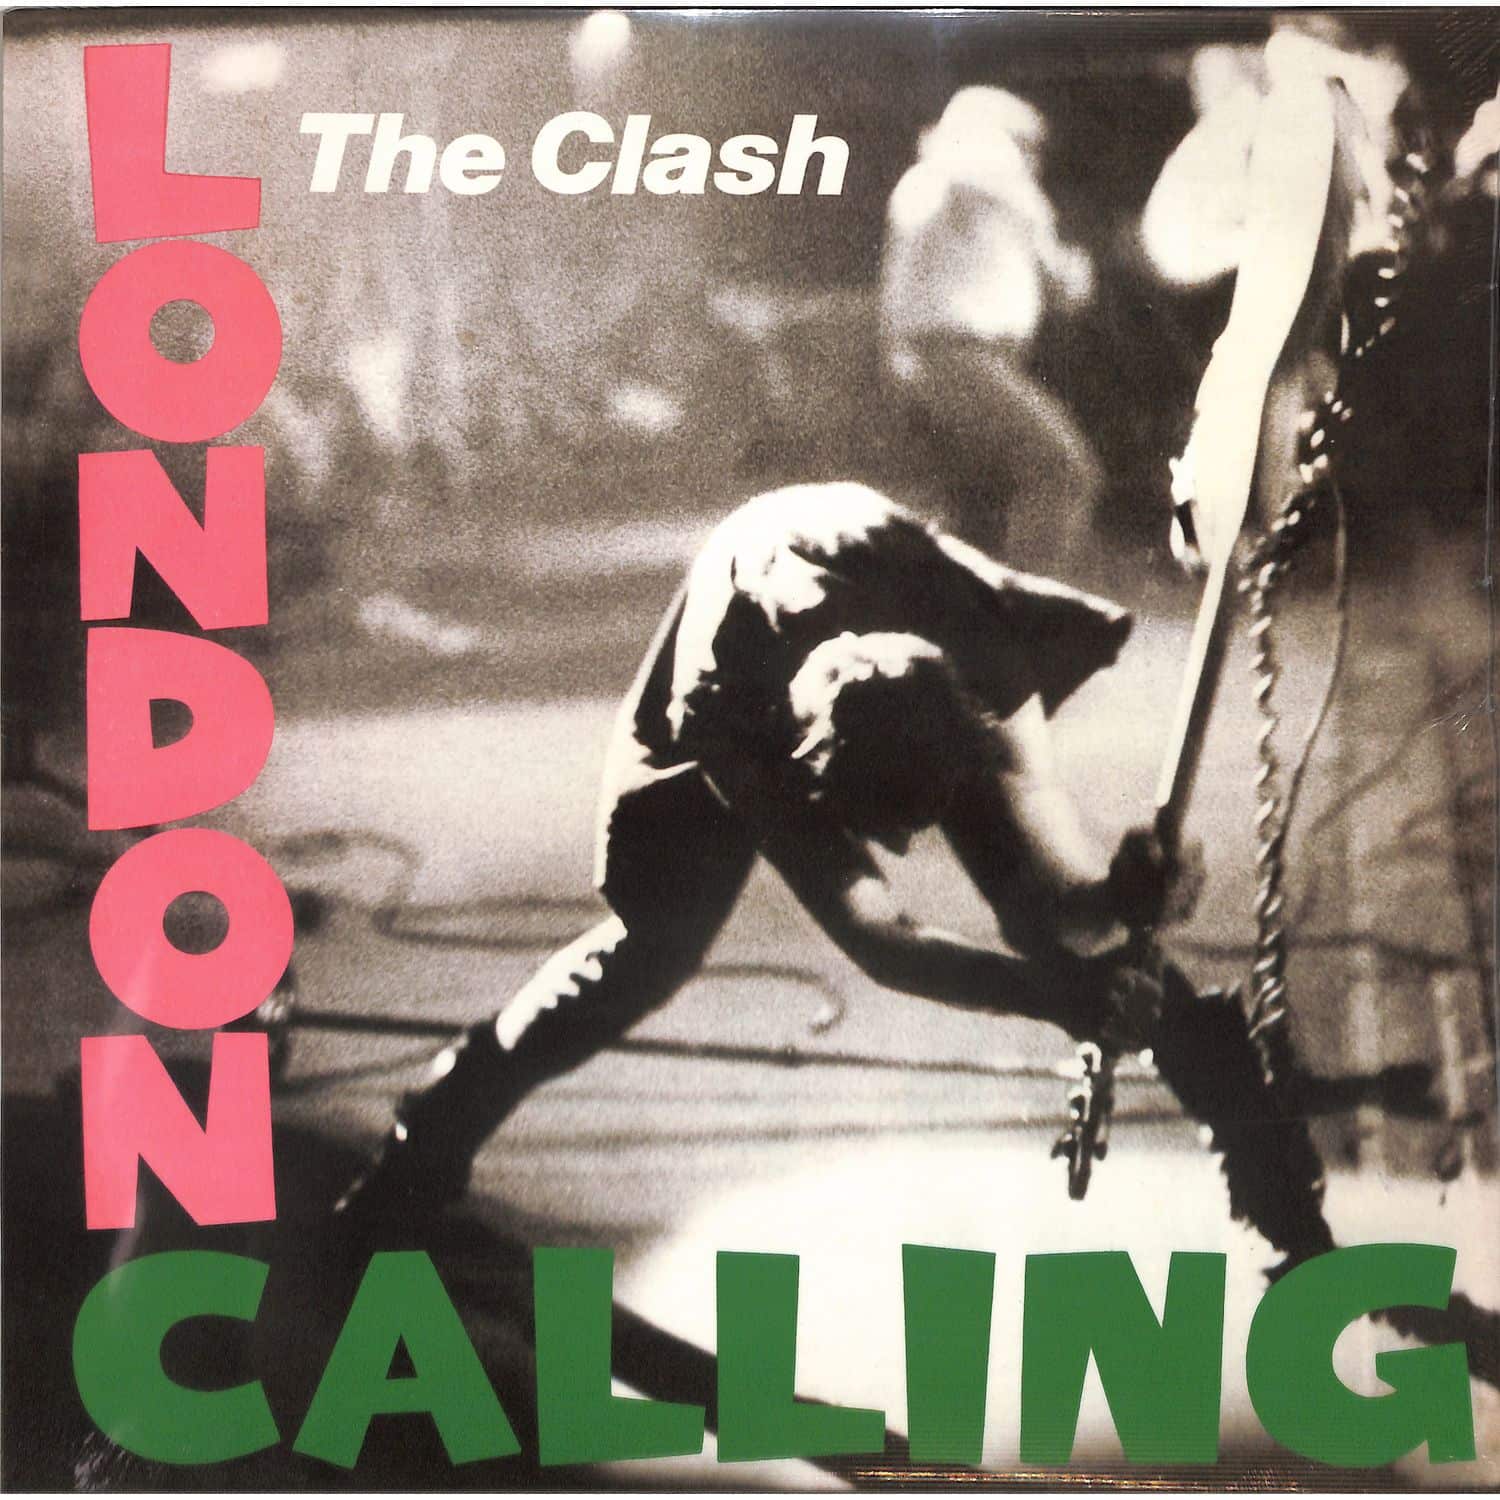 The Clash - LONDON CALLING 